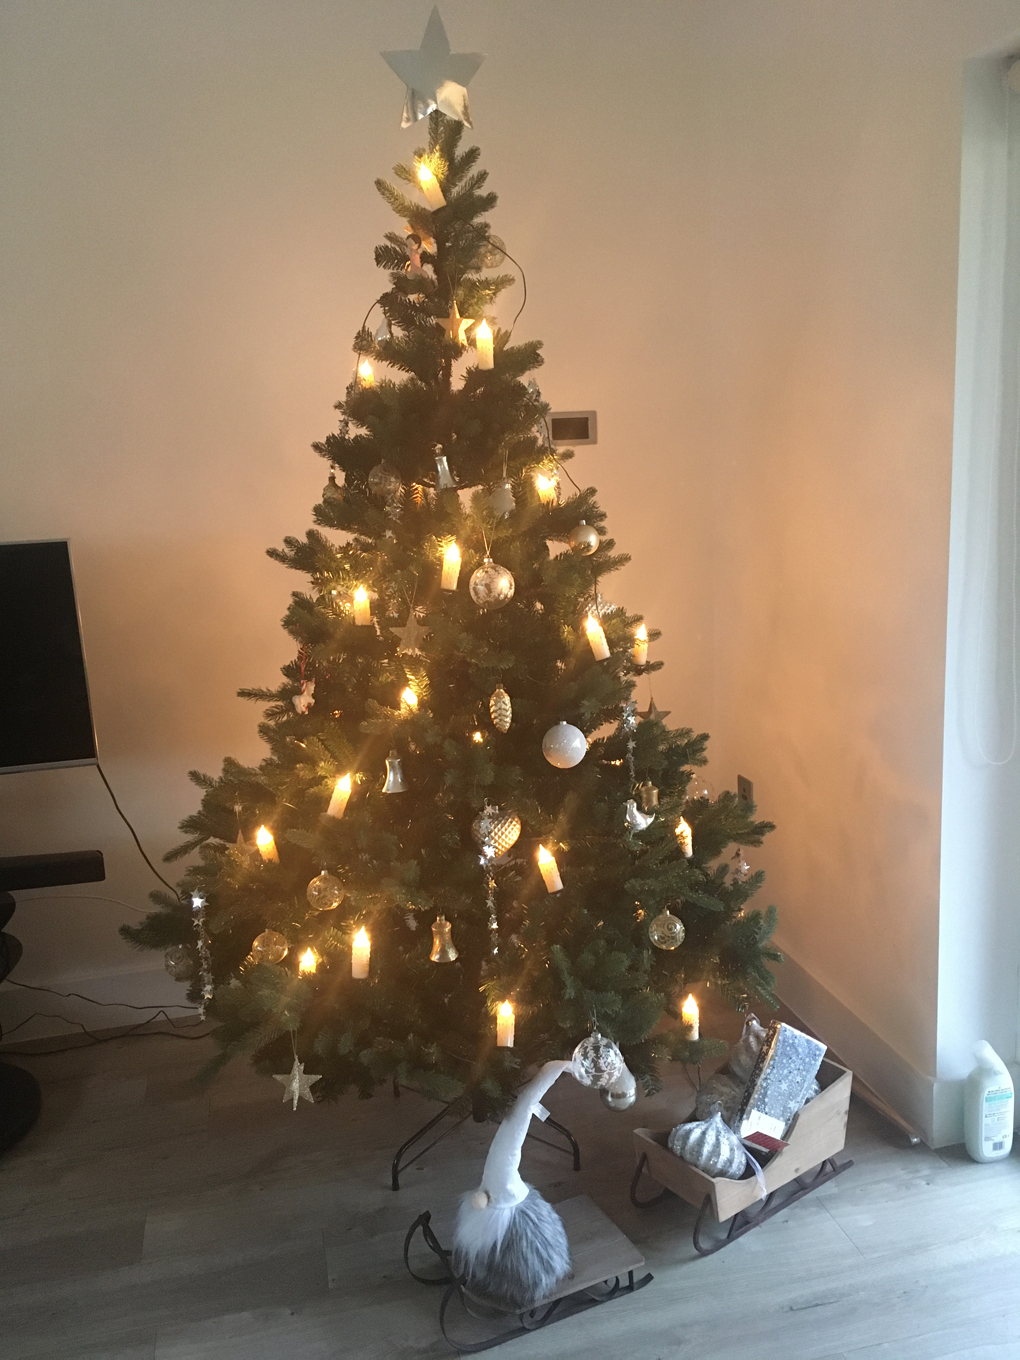 Christmas tree with lights on